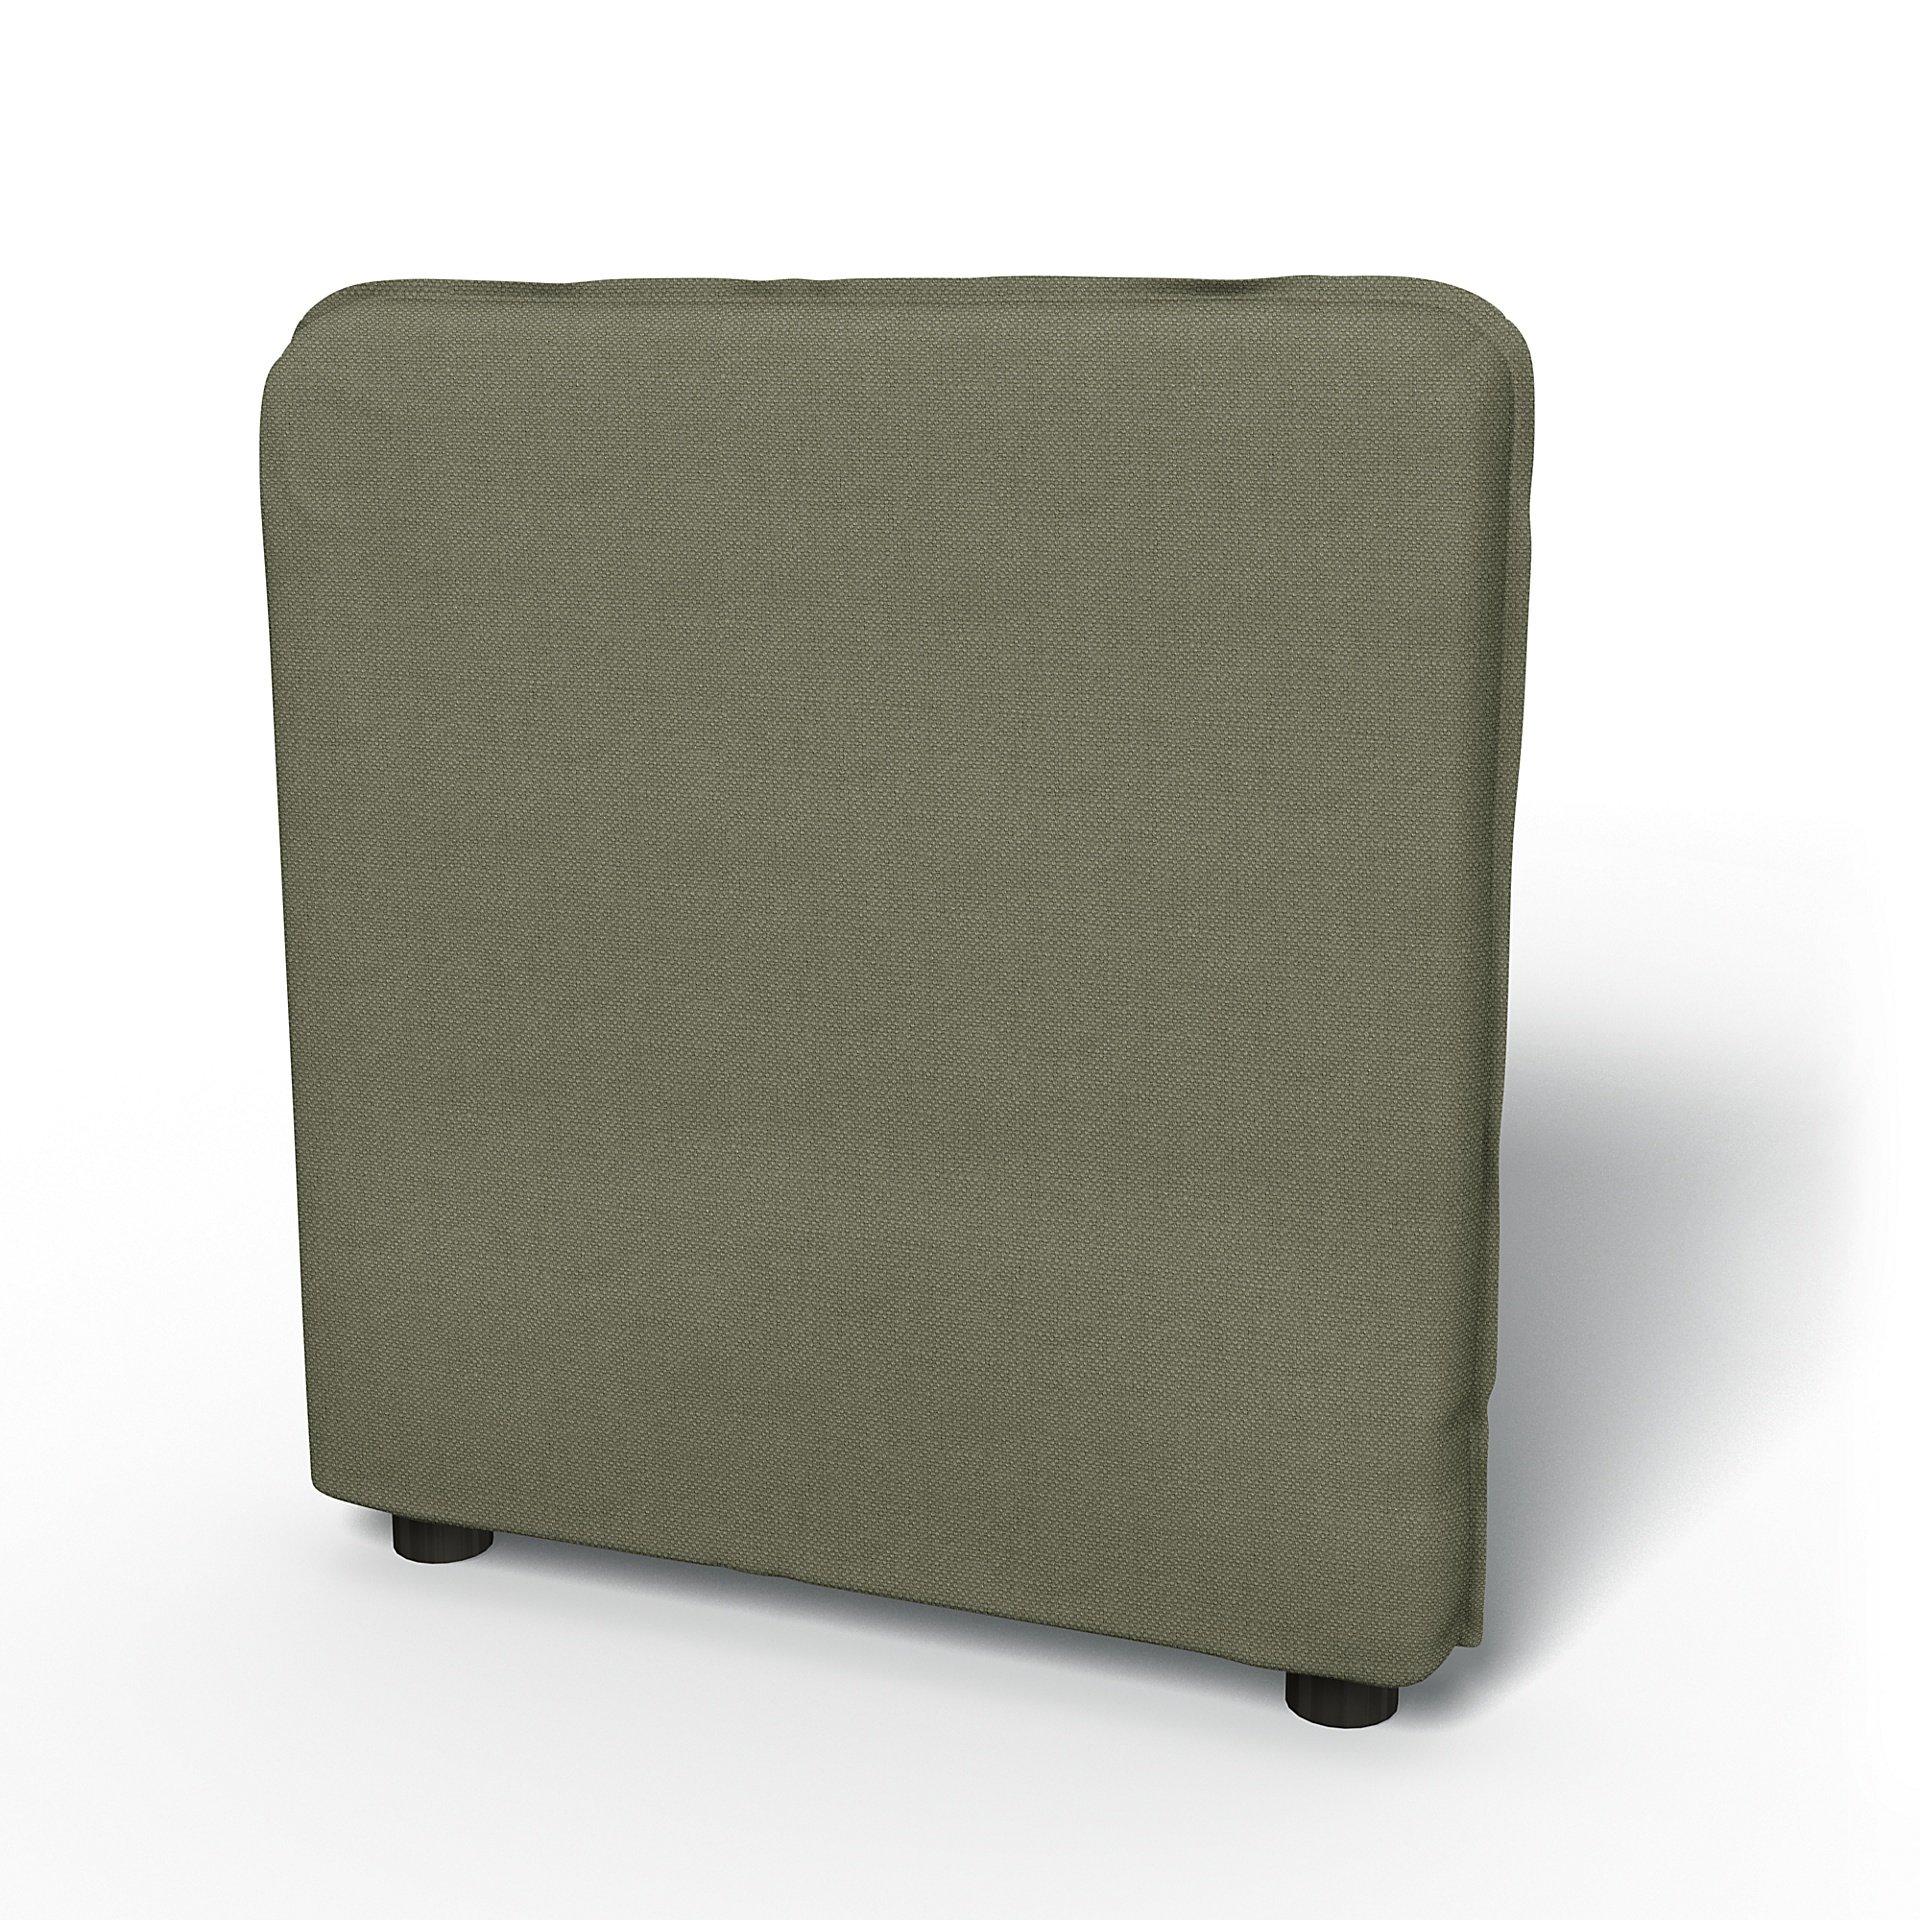 IKEA - Vallentuna Armrest Cover (80x60x13cm), Sage, Linen - Bemz